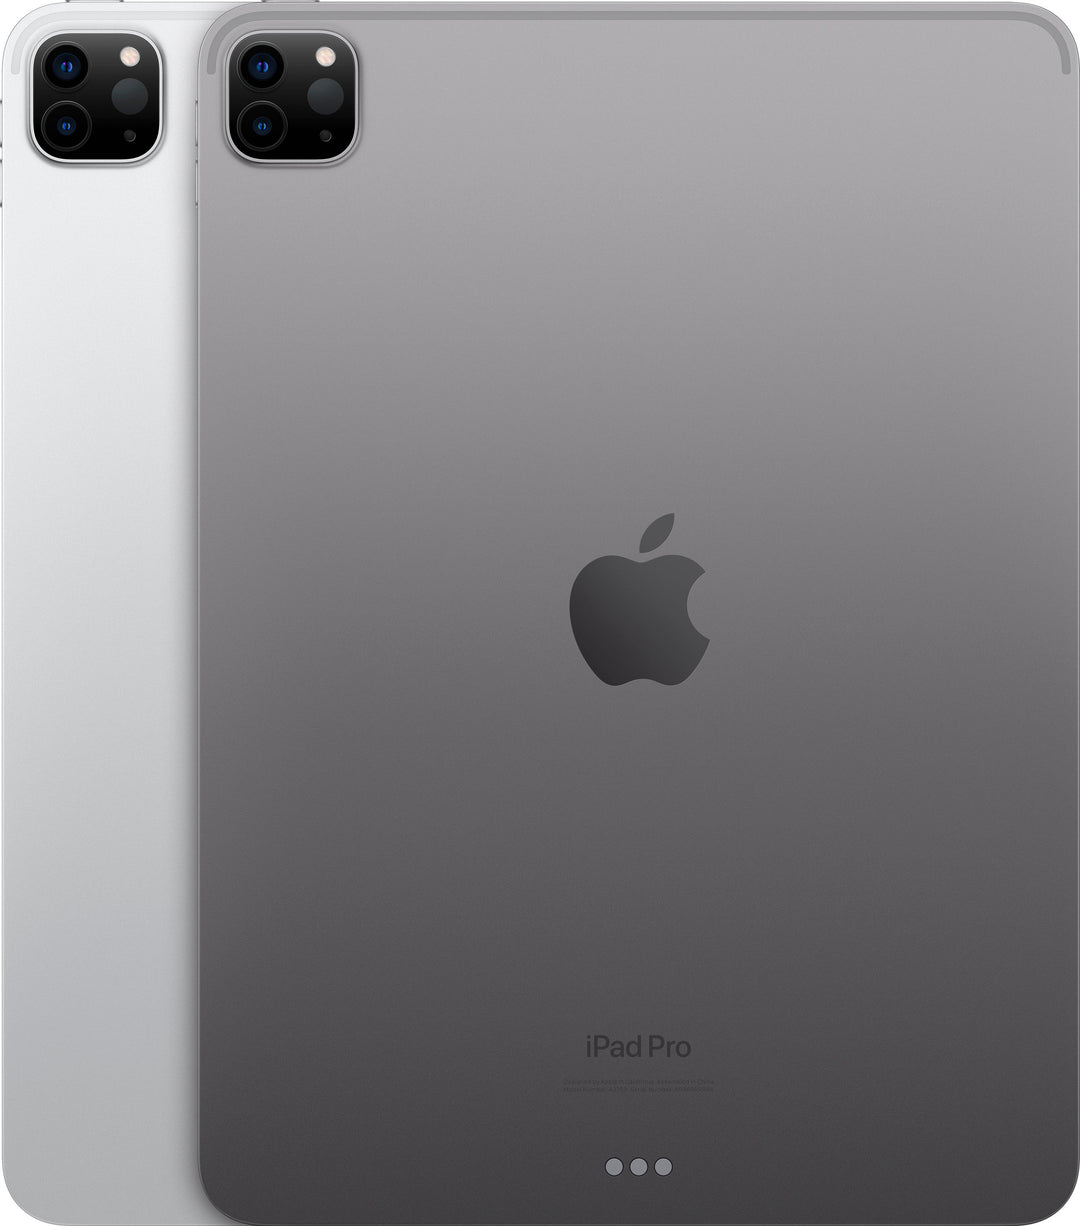 Apple - 12.9-Inch iPad Pro (Latest Model) with Wi-Fi - 128GB - Silver_5